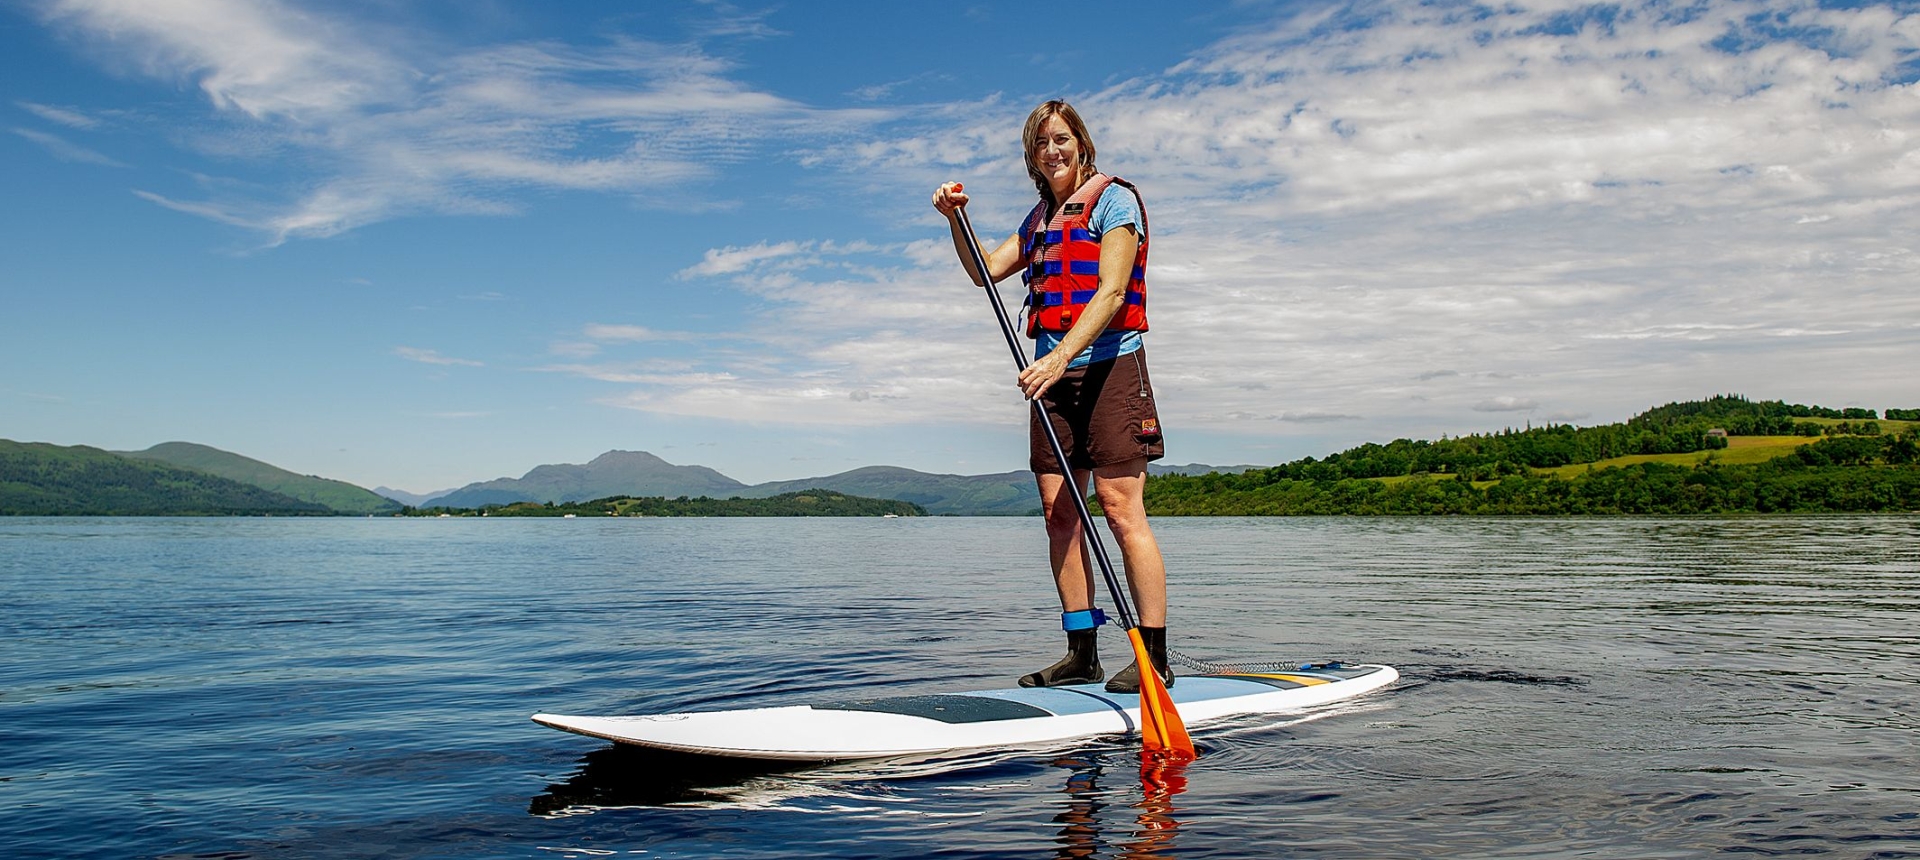 Dame Katherine Grainger standing on a paddle board on Loch Lomond